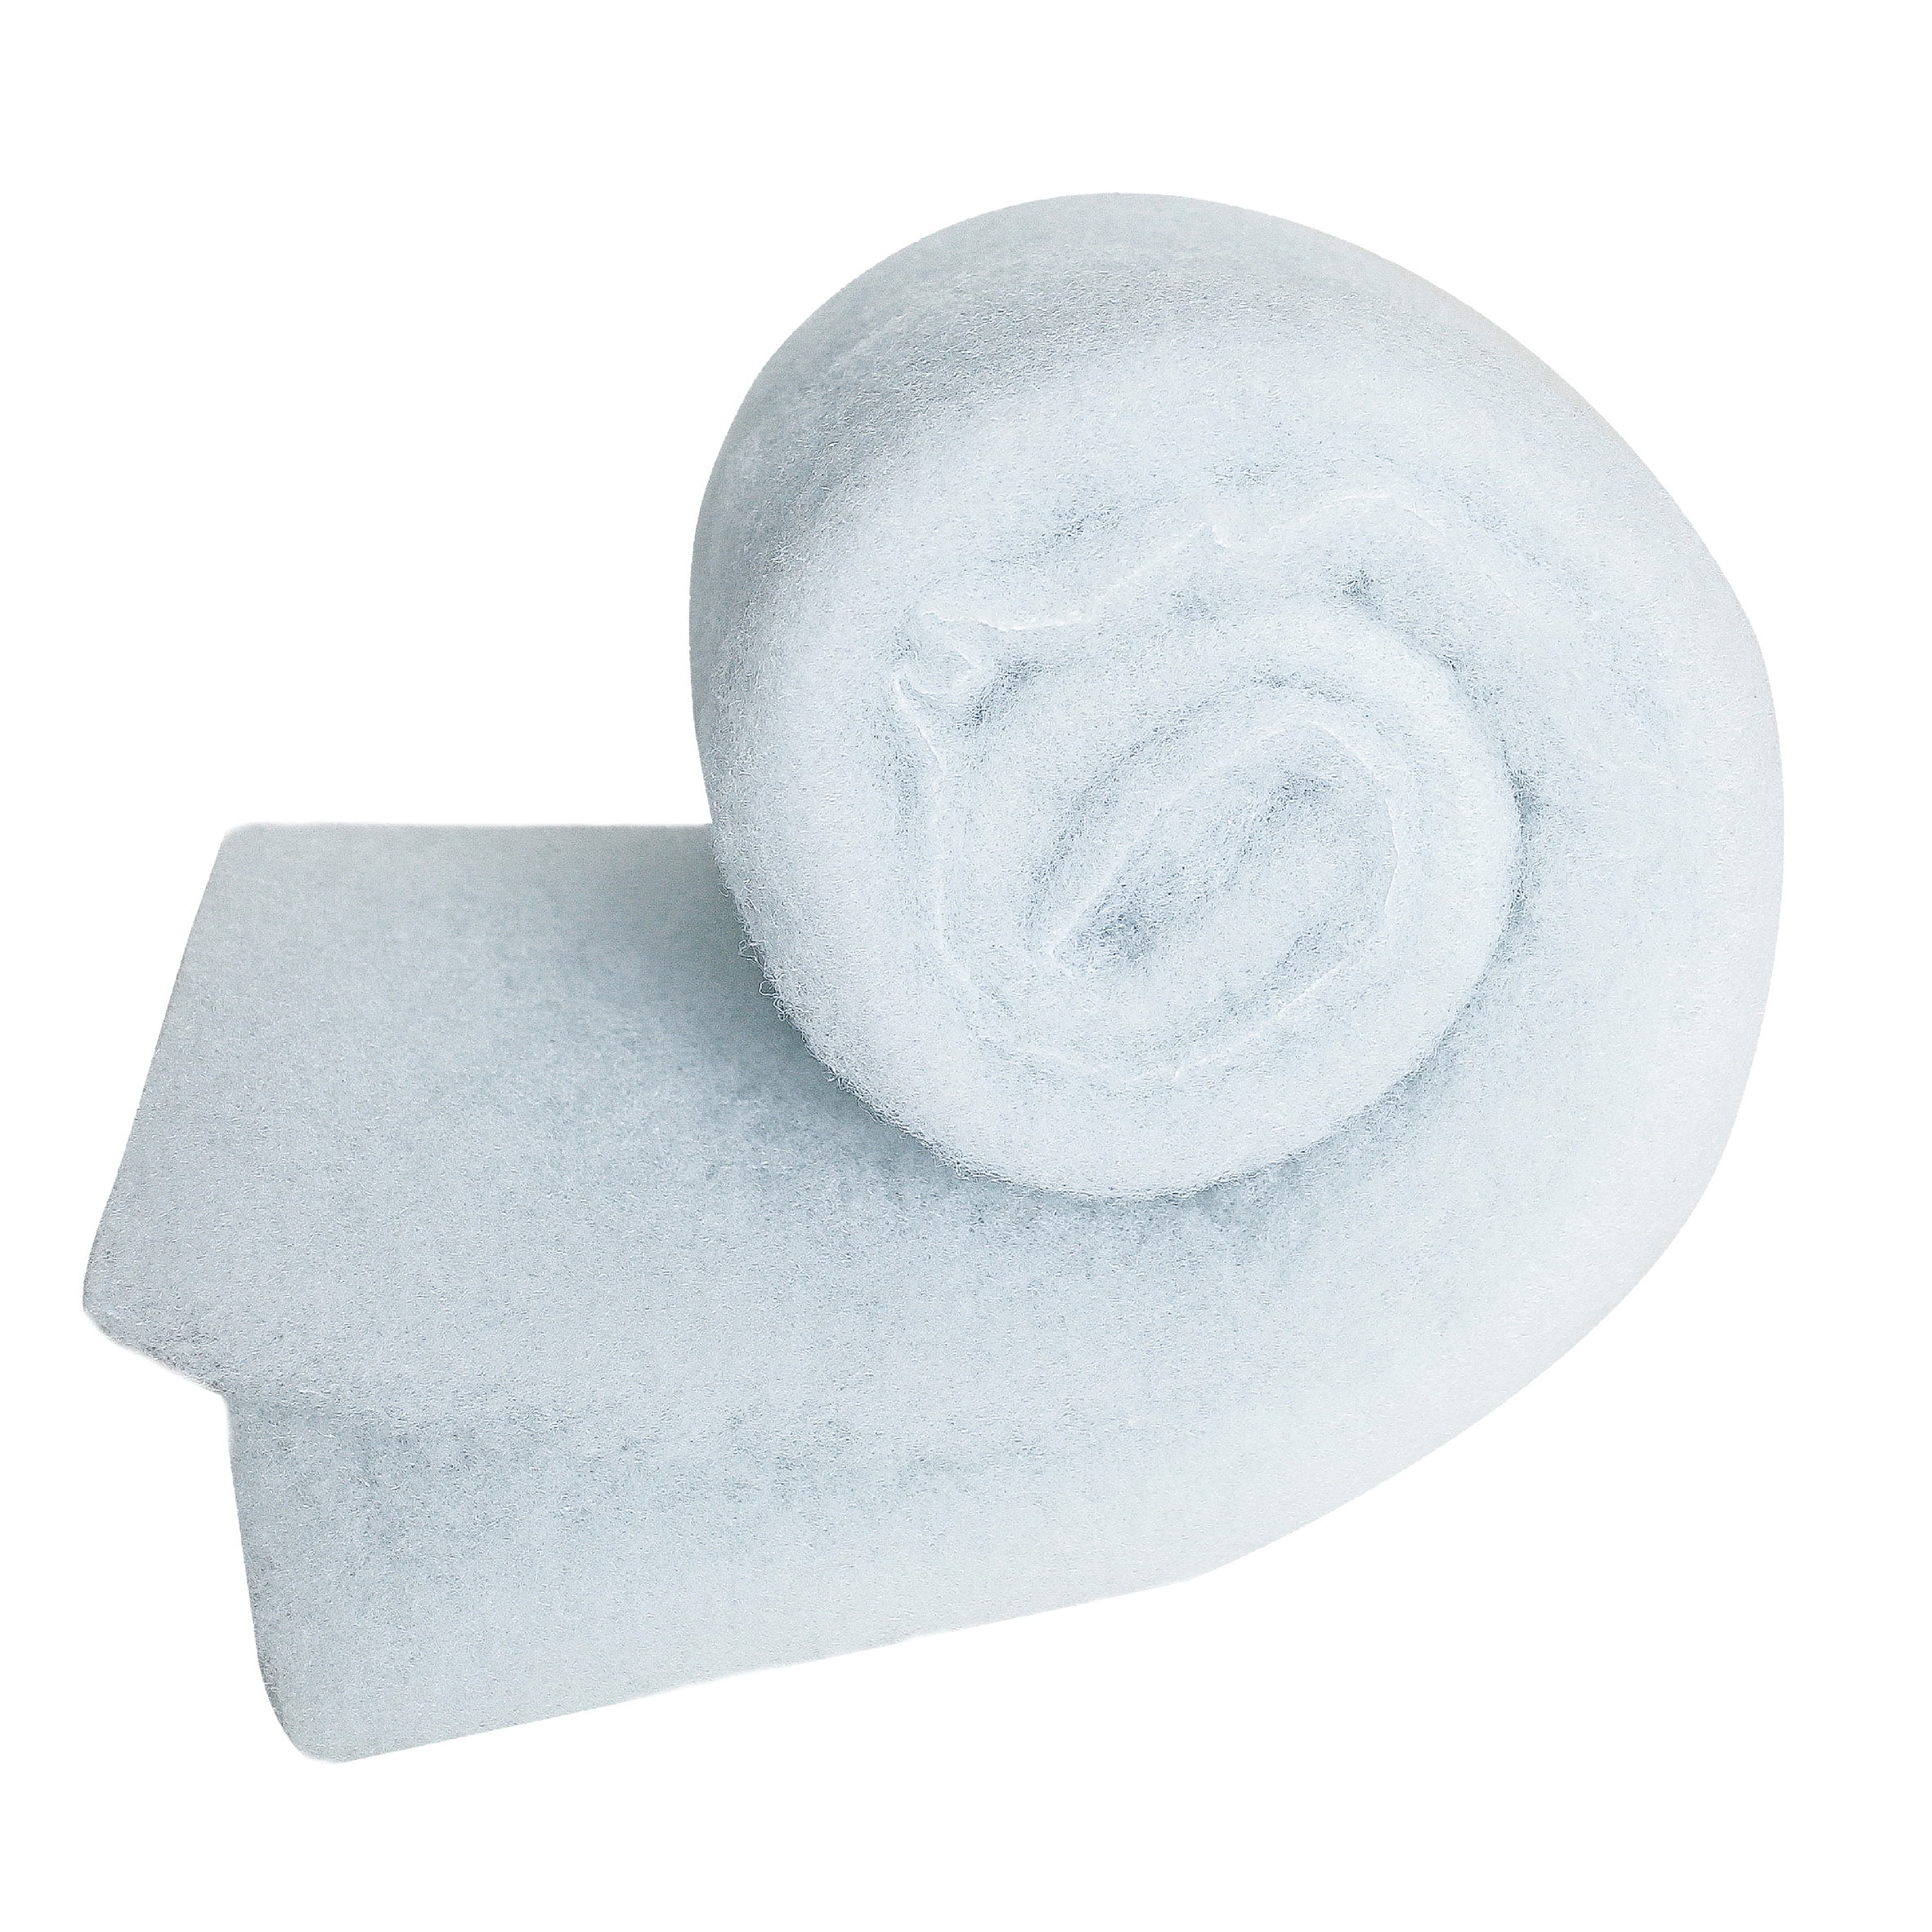 Dacron Wrap  Foam n More & Upholstery